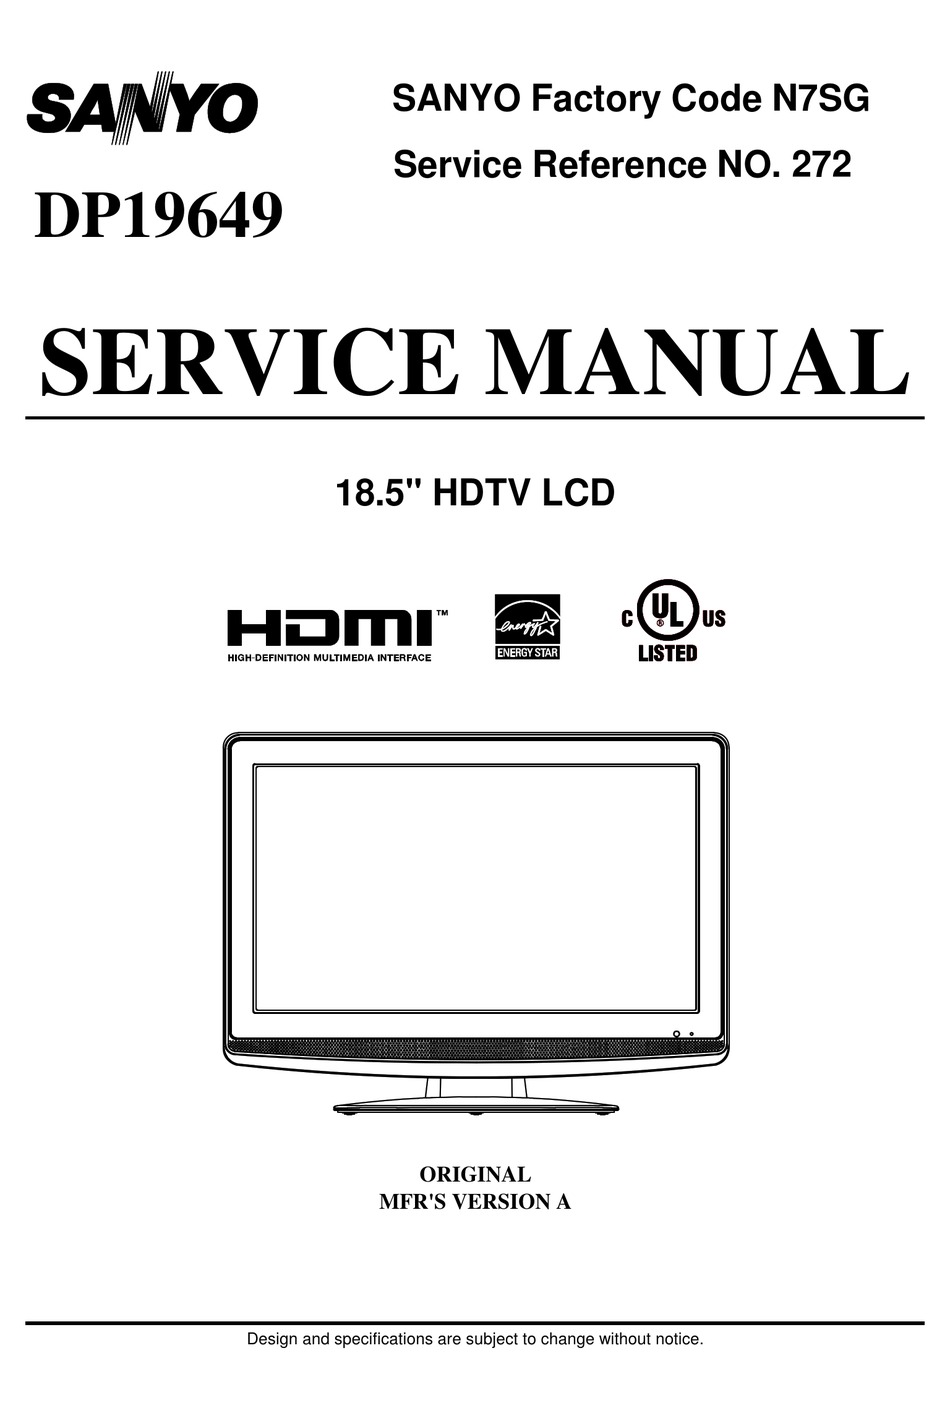 SANYO DP19649 SERVICE MANUAL Pdf Download | ManualsLib